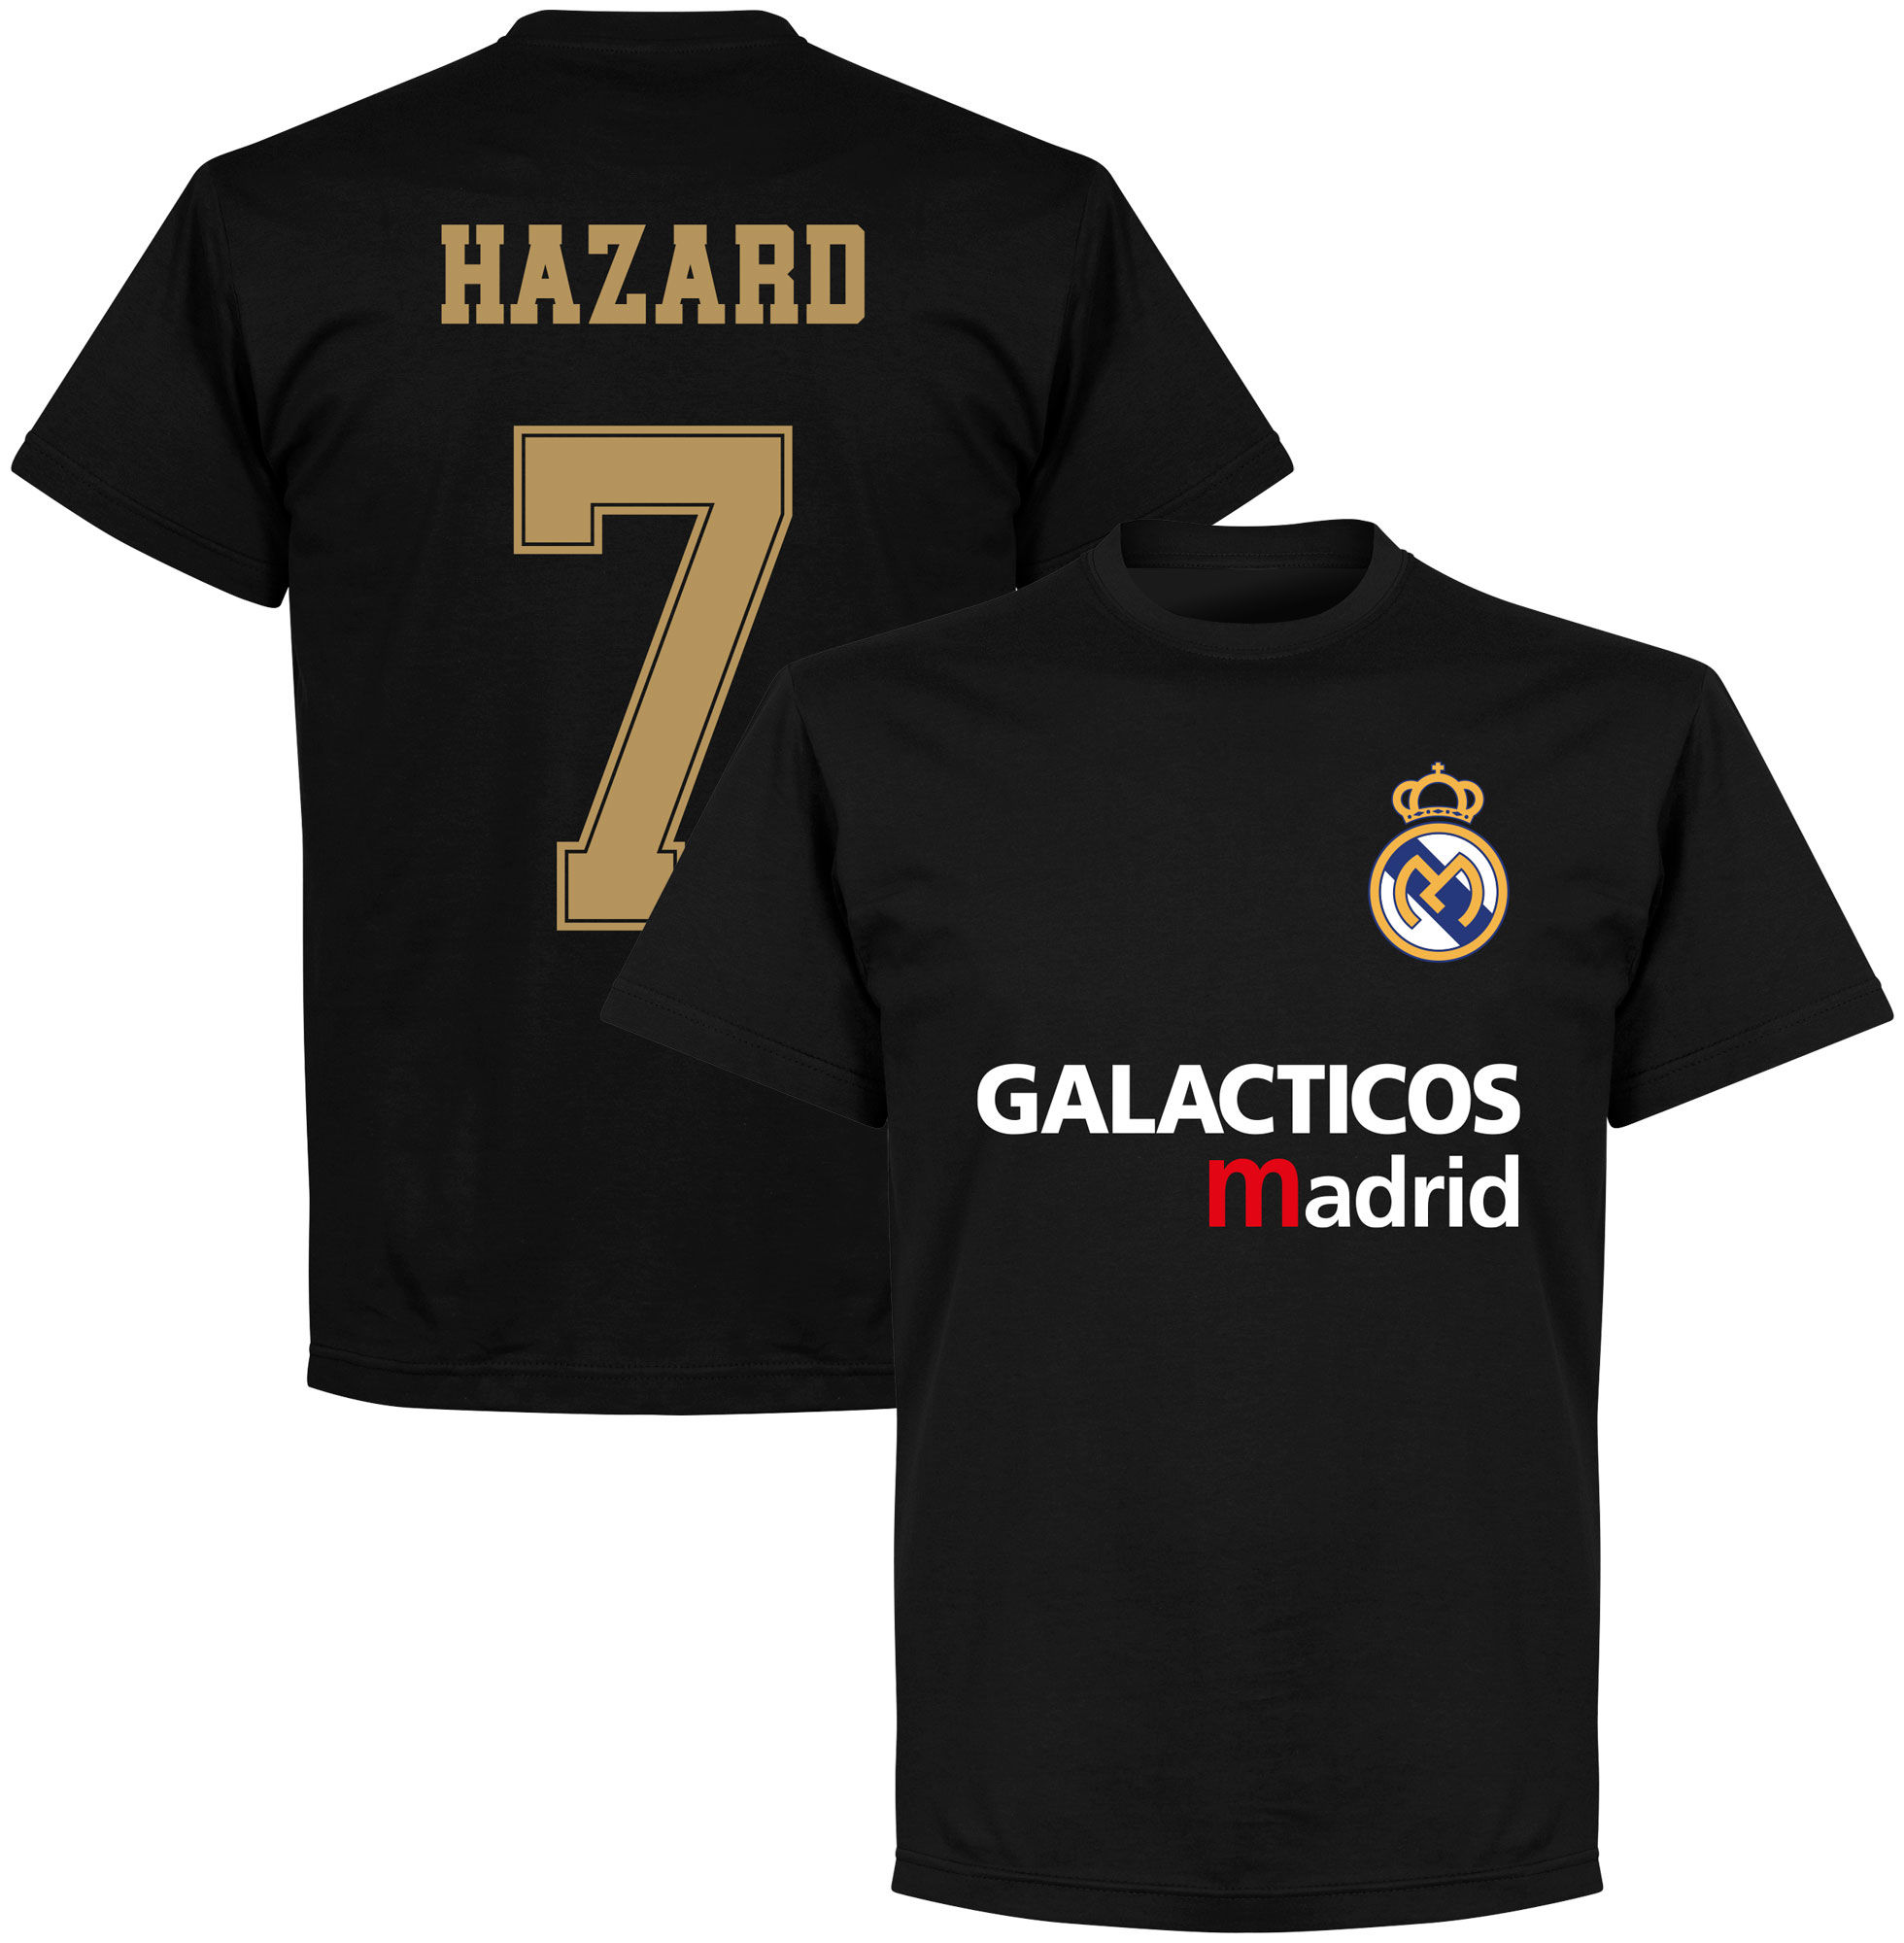 Real Madrid - Tričko "Galácticos Madrid" - Eden Hazard, číslo 7, černé